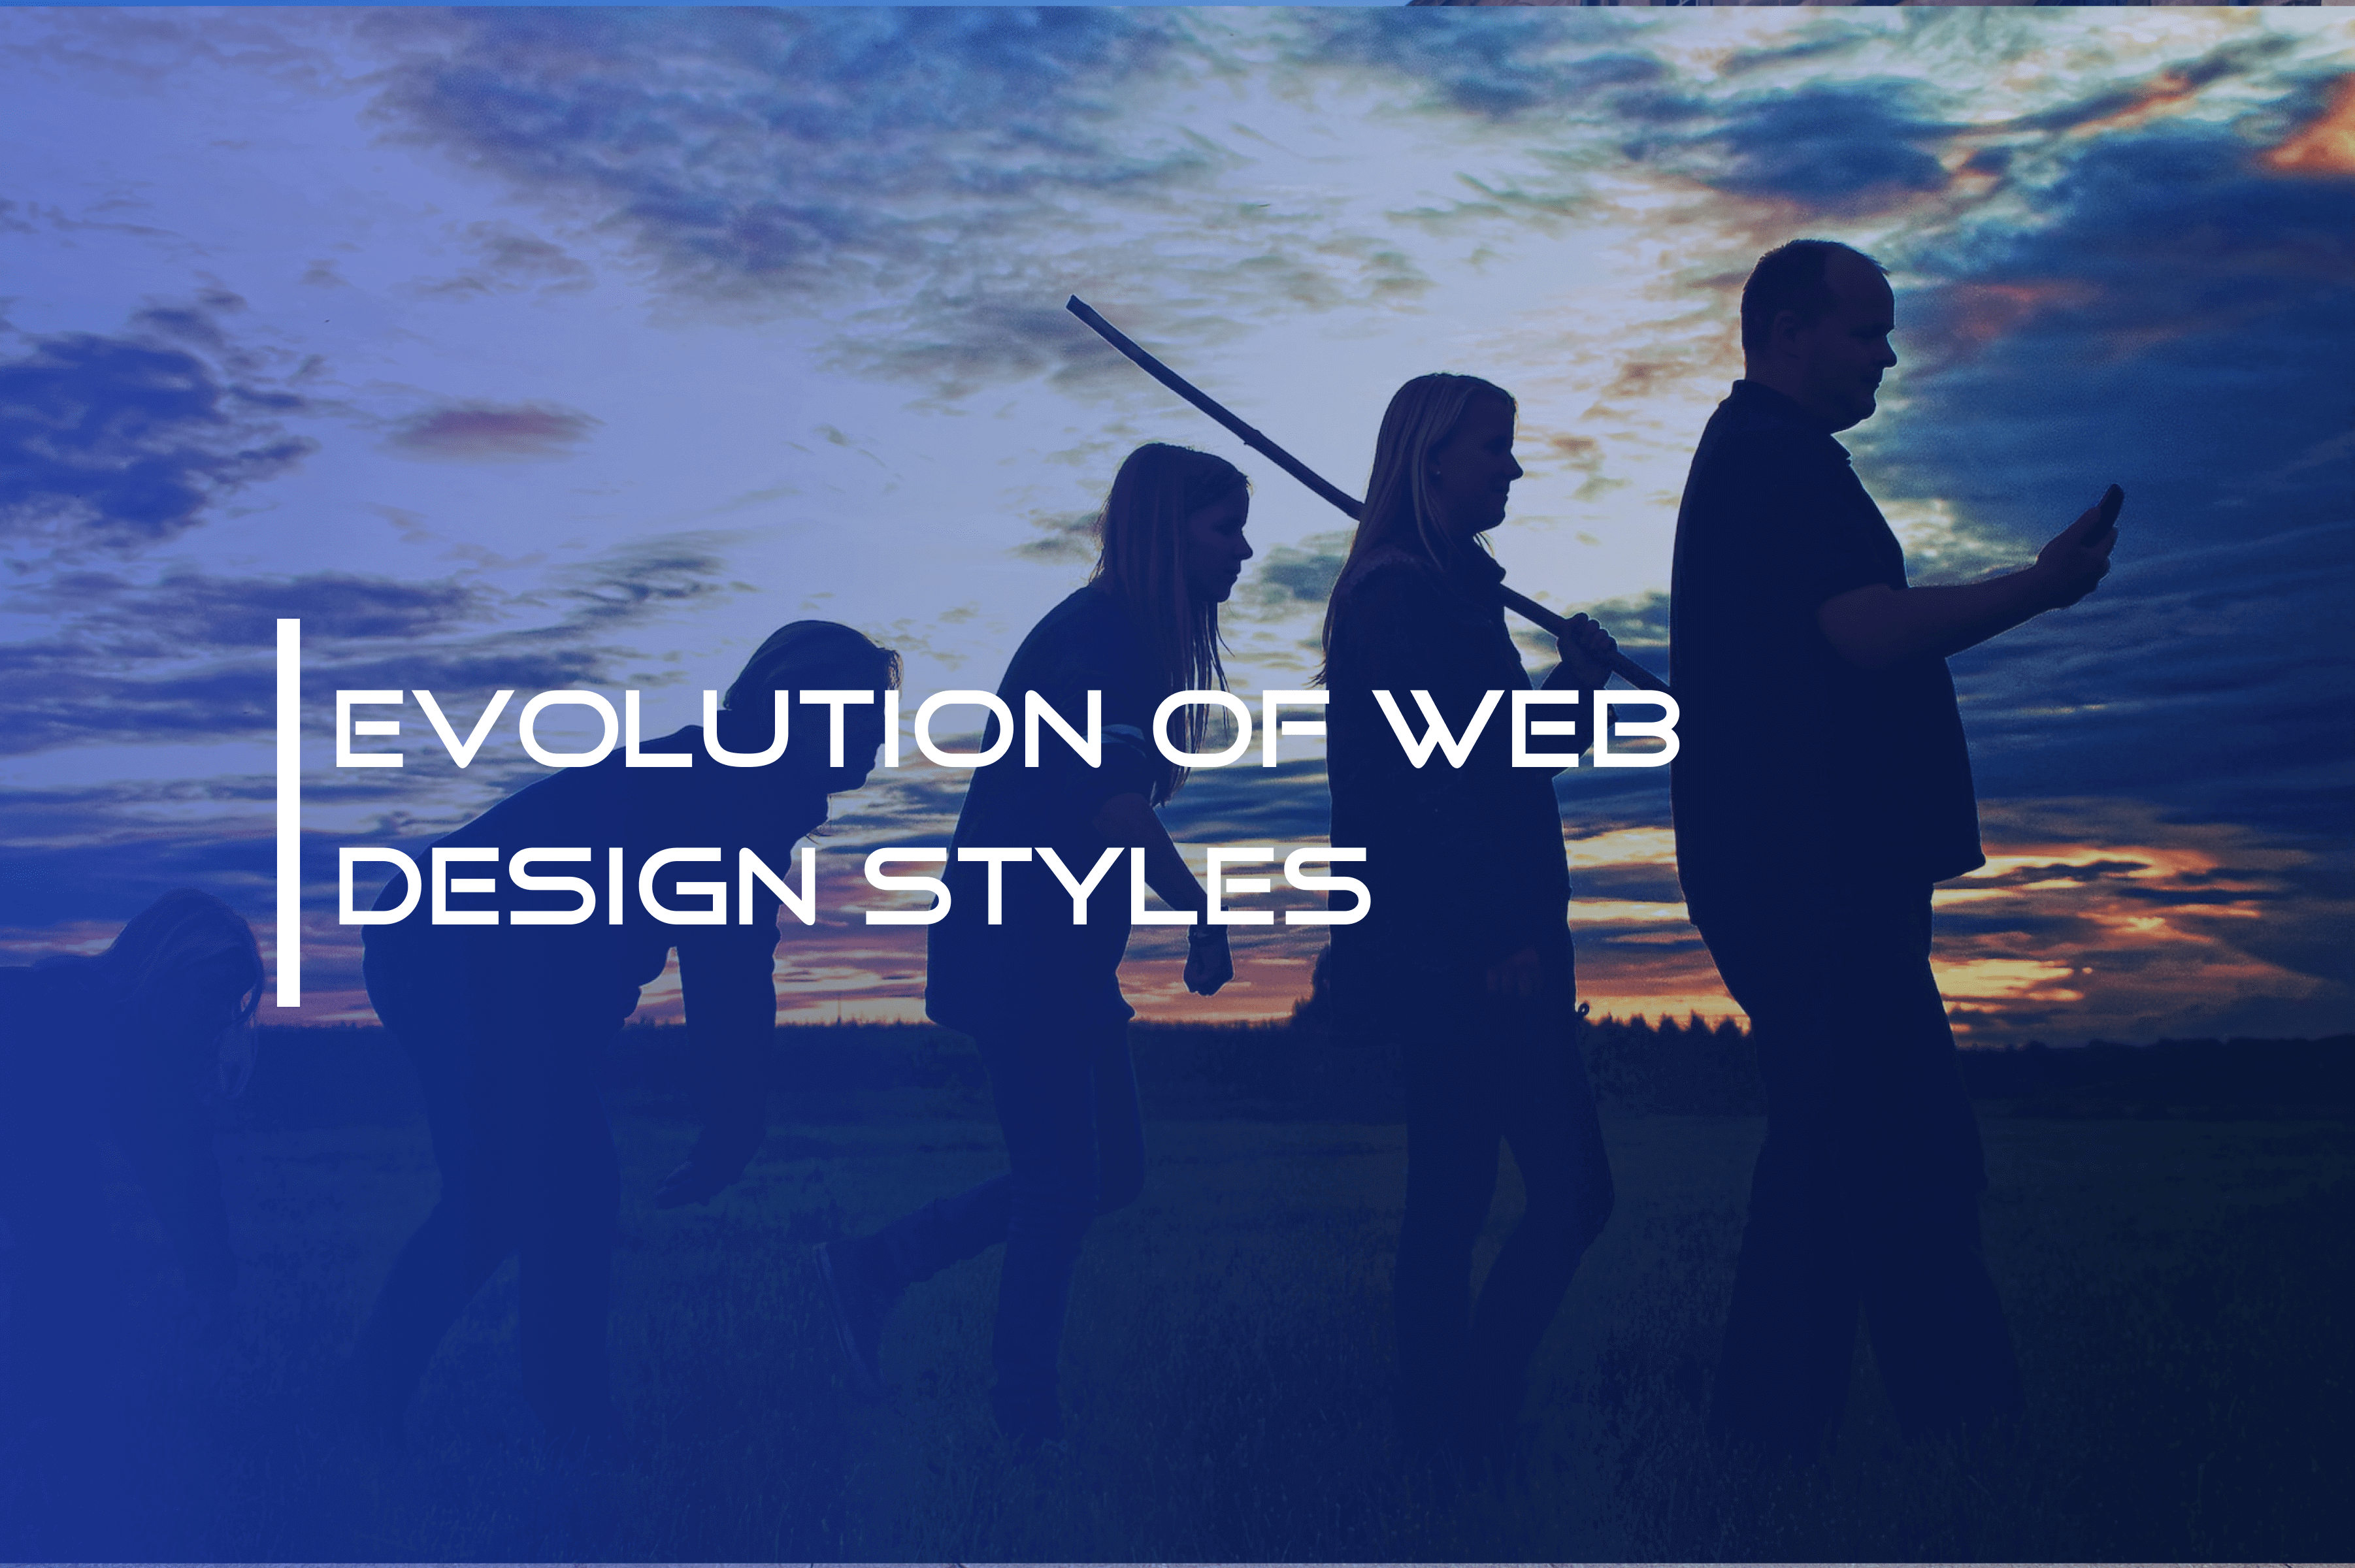 Evolution of web design styles